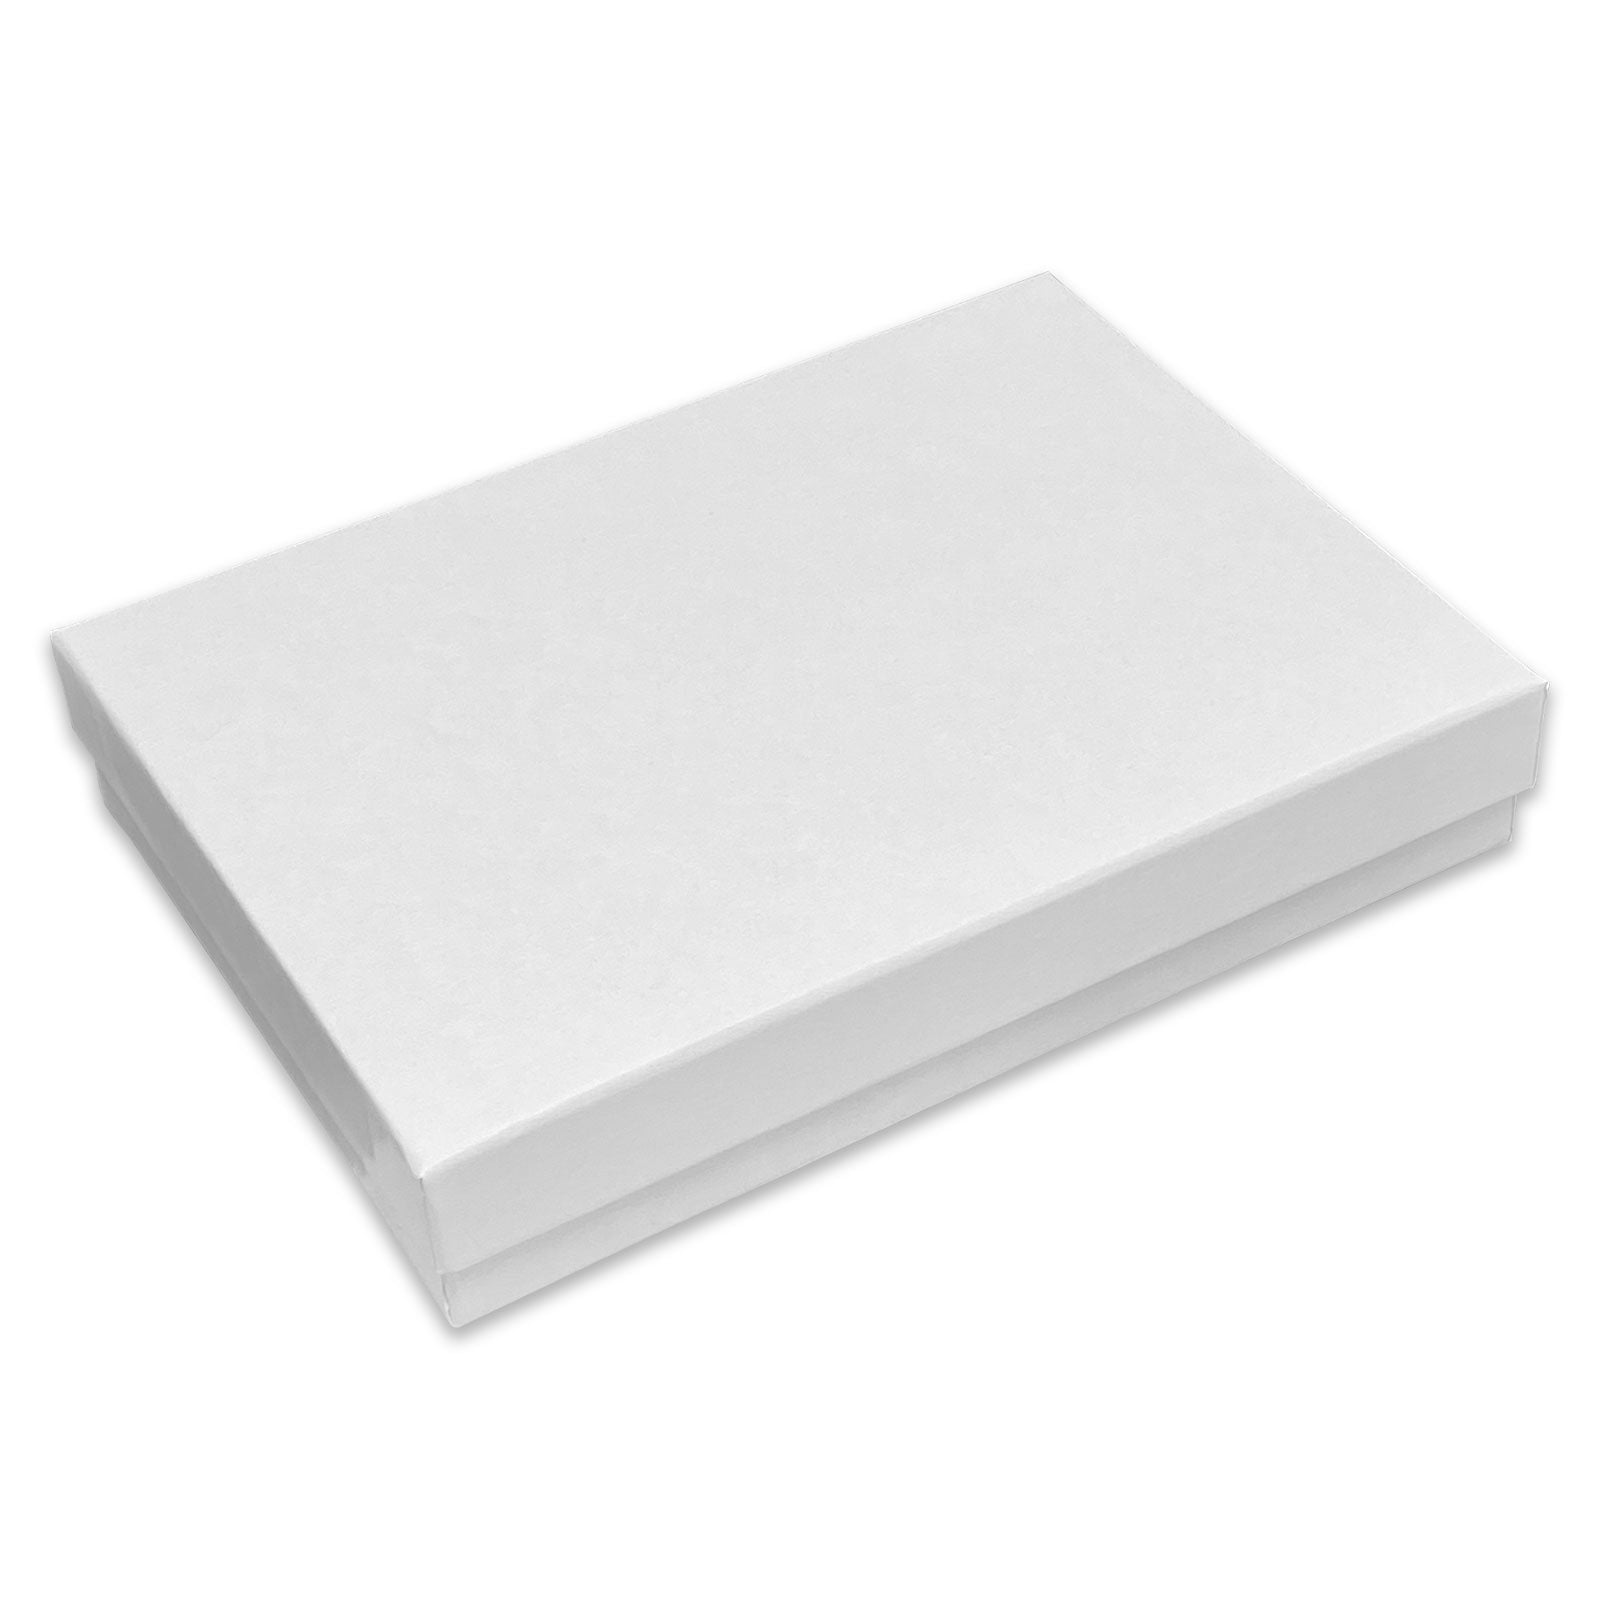 5" x 4" x 1" Polished White Cotton Filled Paper Box